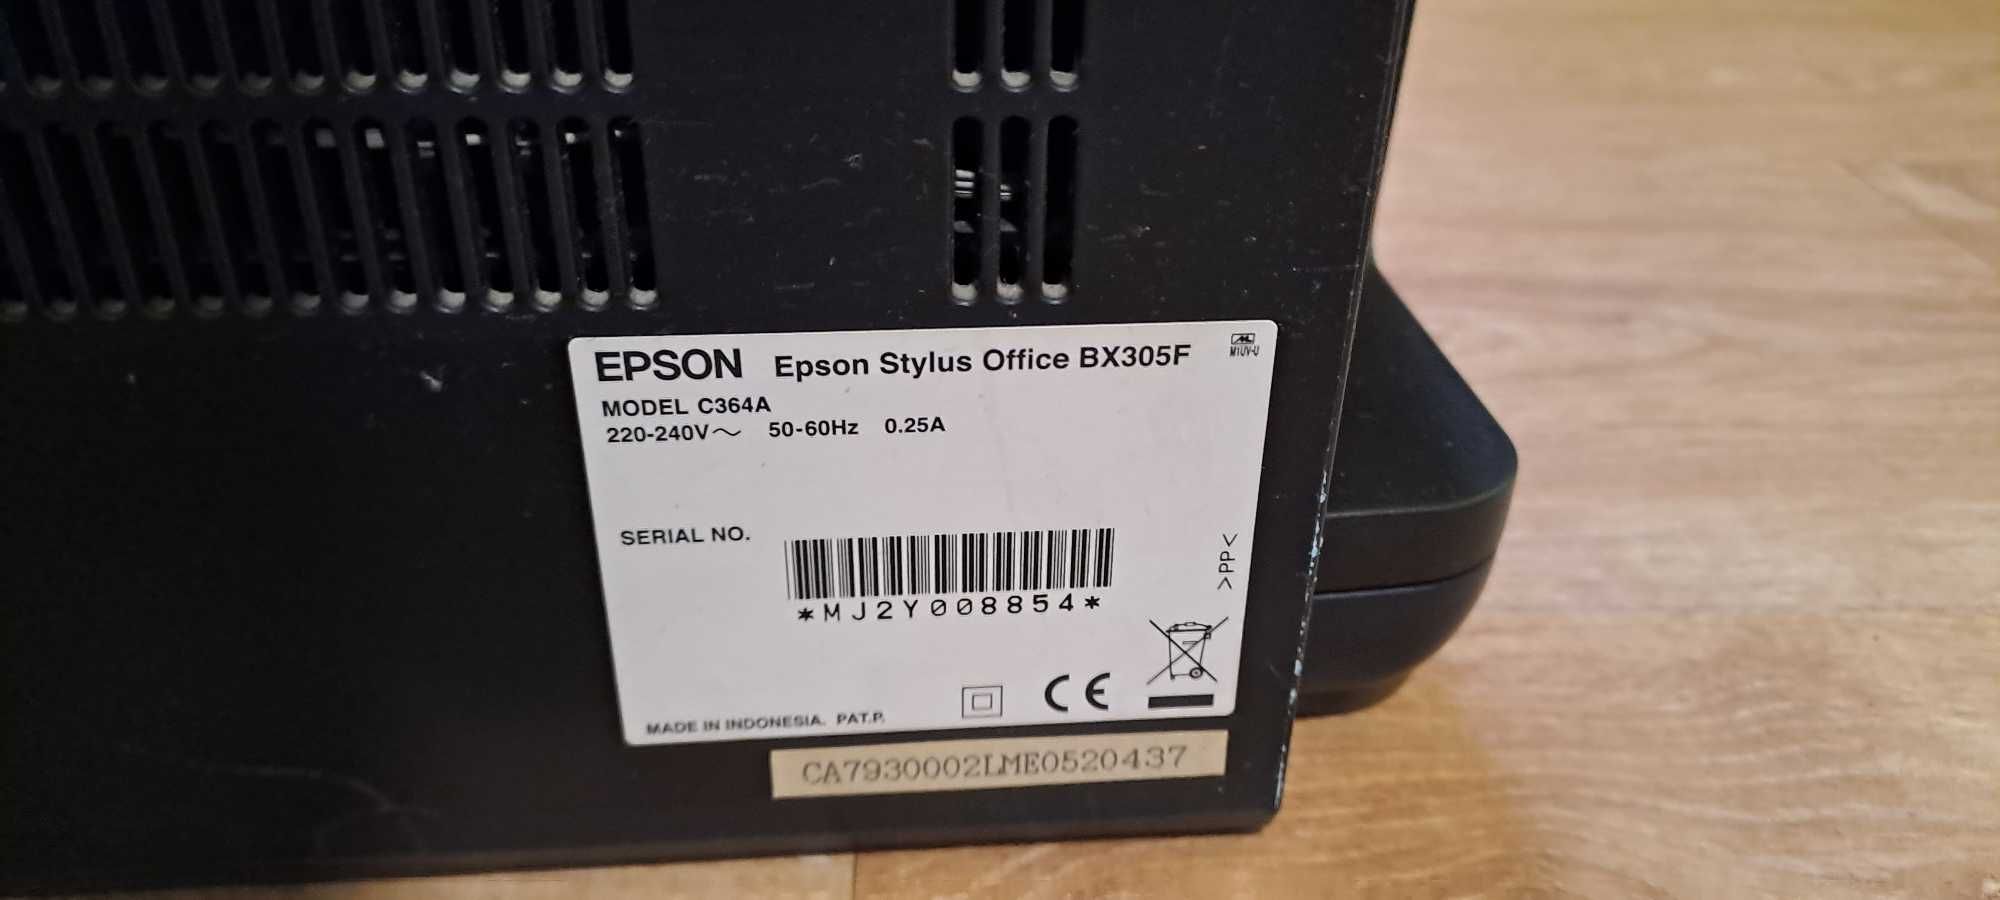 Drukarka Epson stylus office bx305f